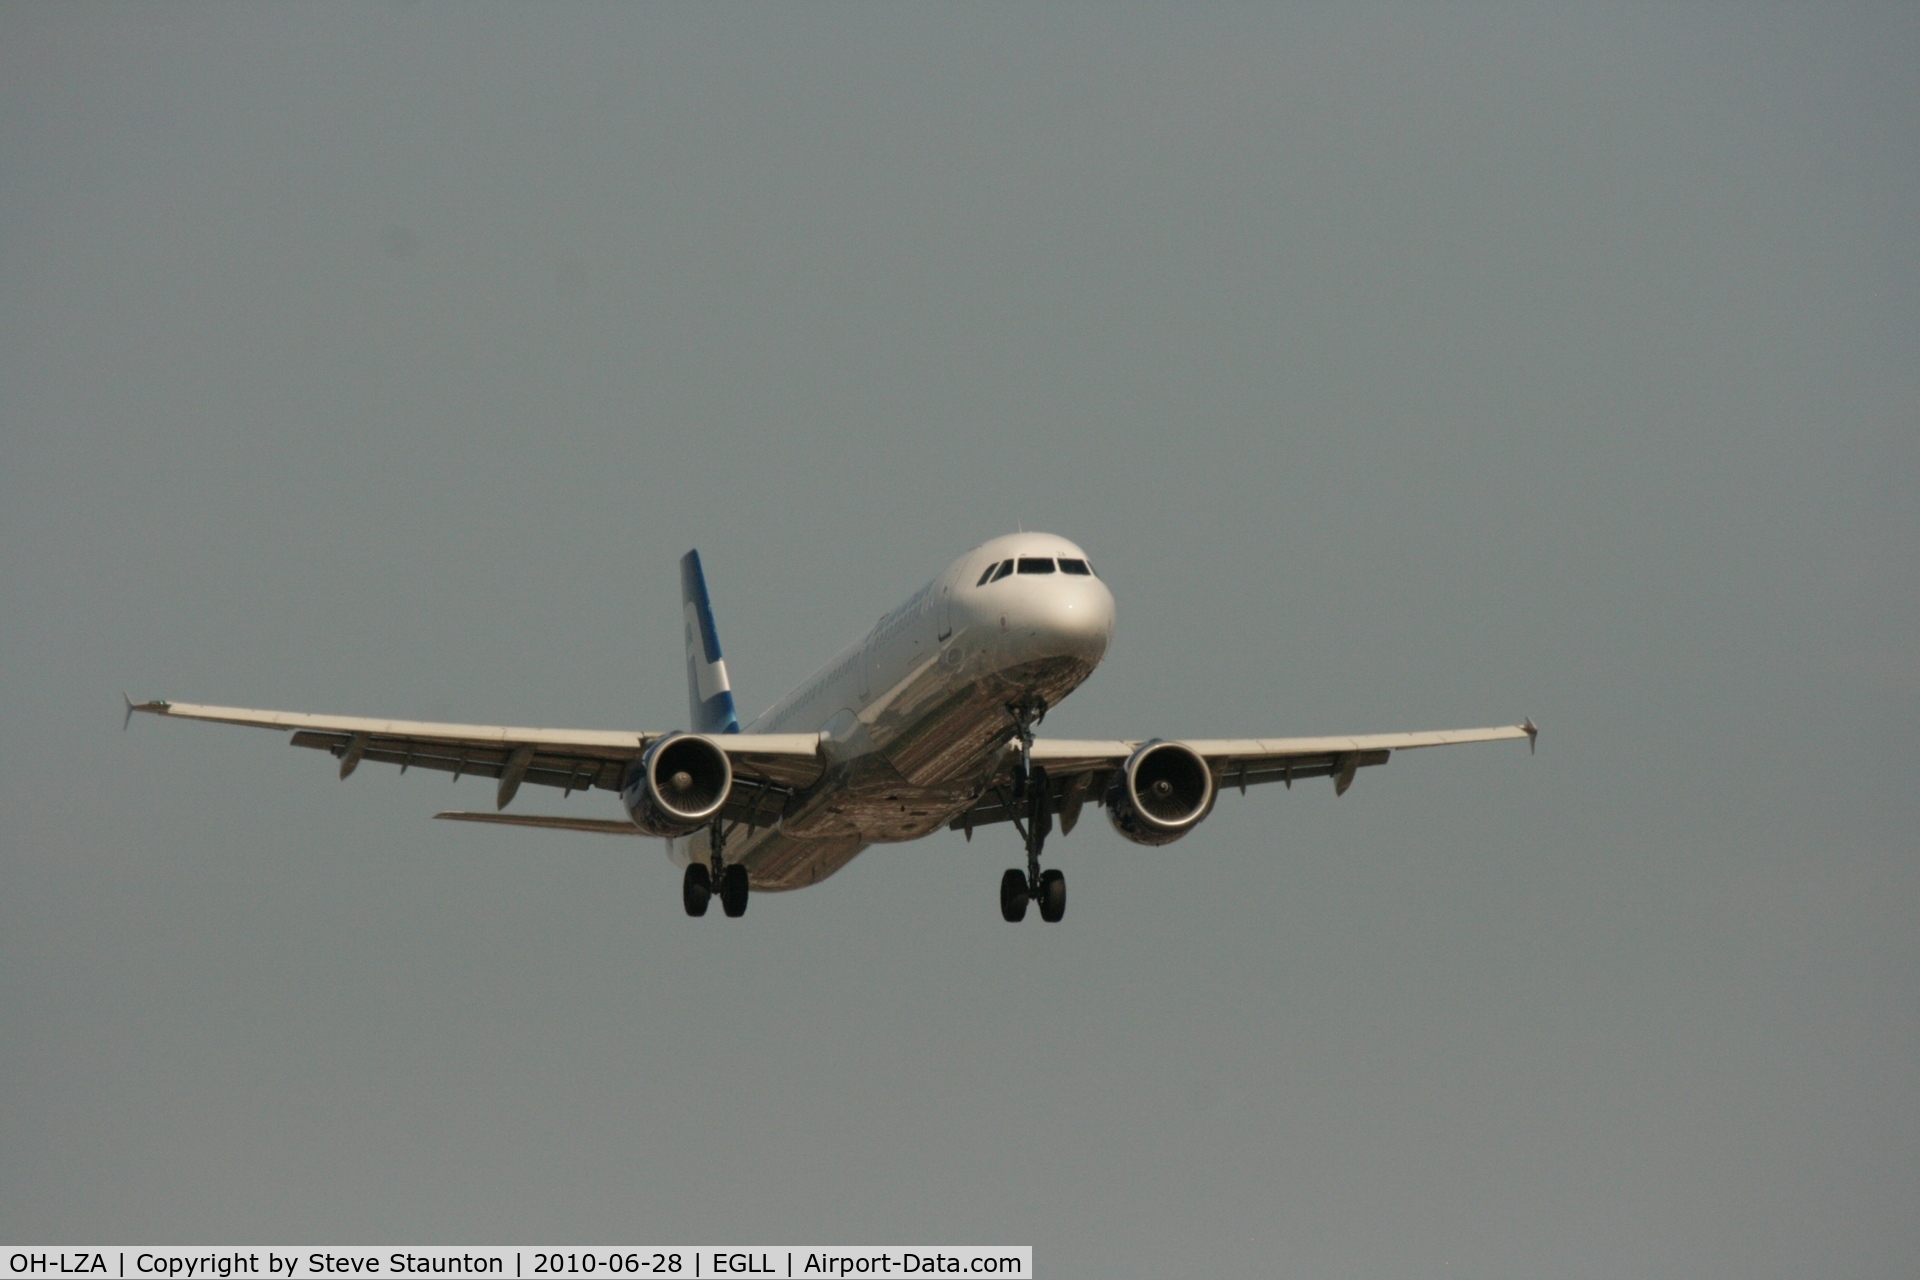 OH-LZA, 1999 Airbus A321-211 C/N 0941, Taken at Heathrow Airport, June 2010